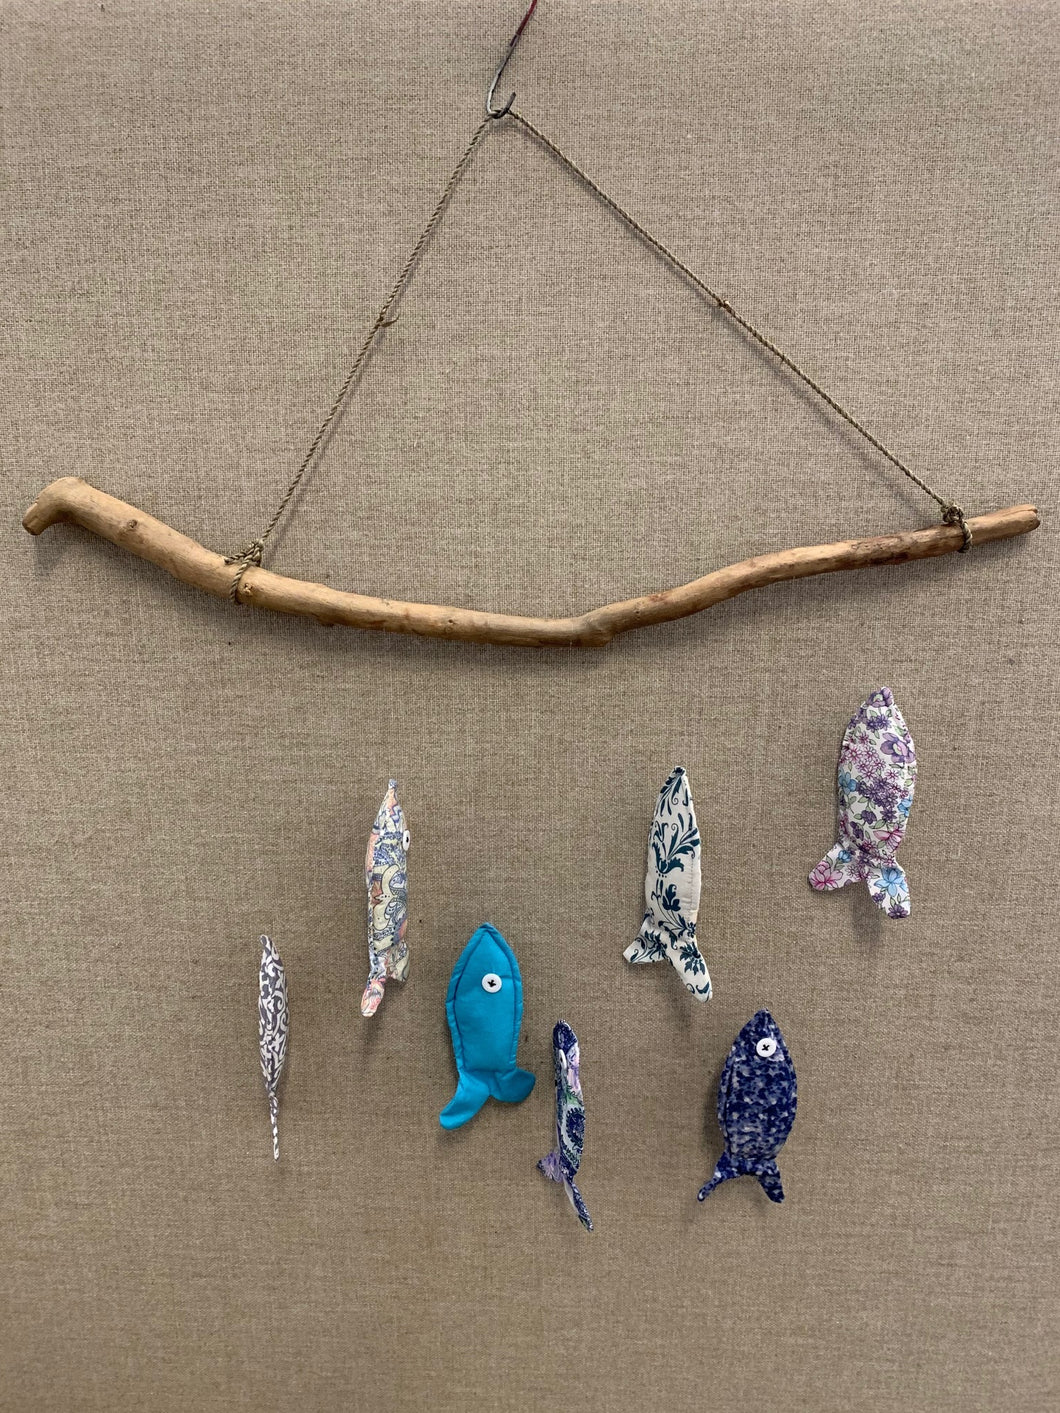 mobile - batik fabric fish - driftwood stick/braided rope - hand sewn / handmade - asst'd